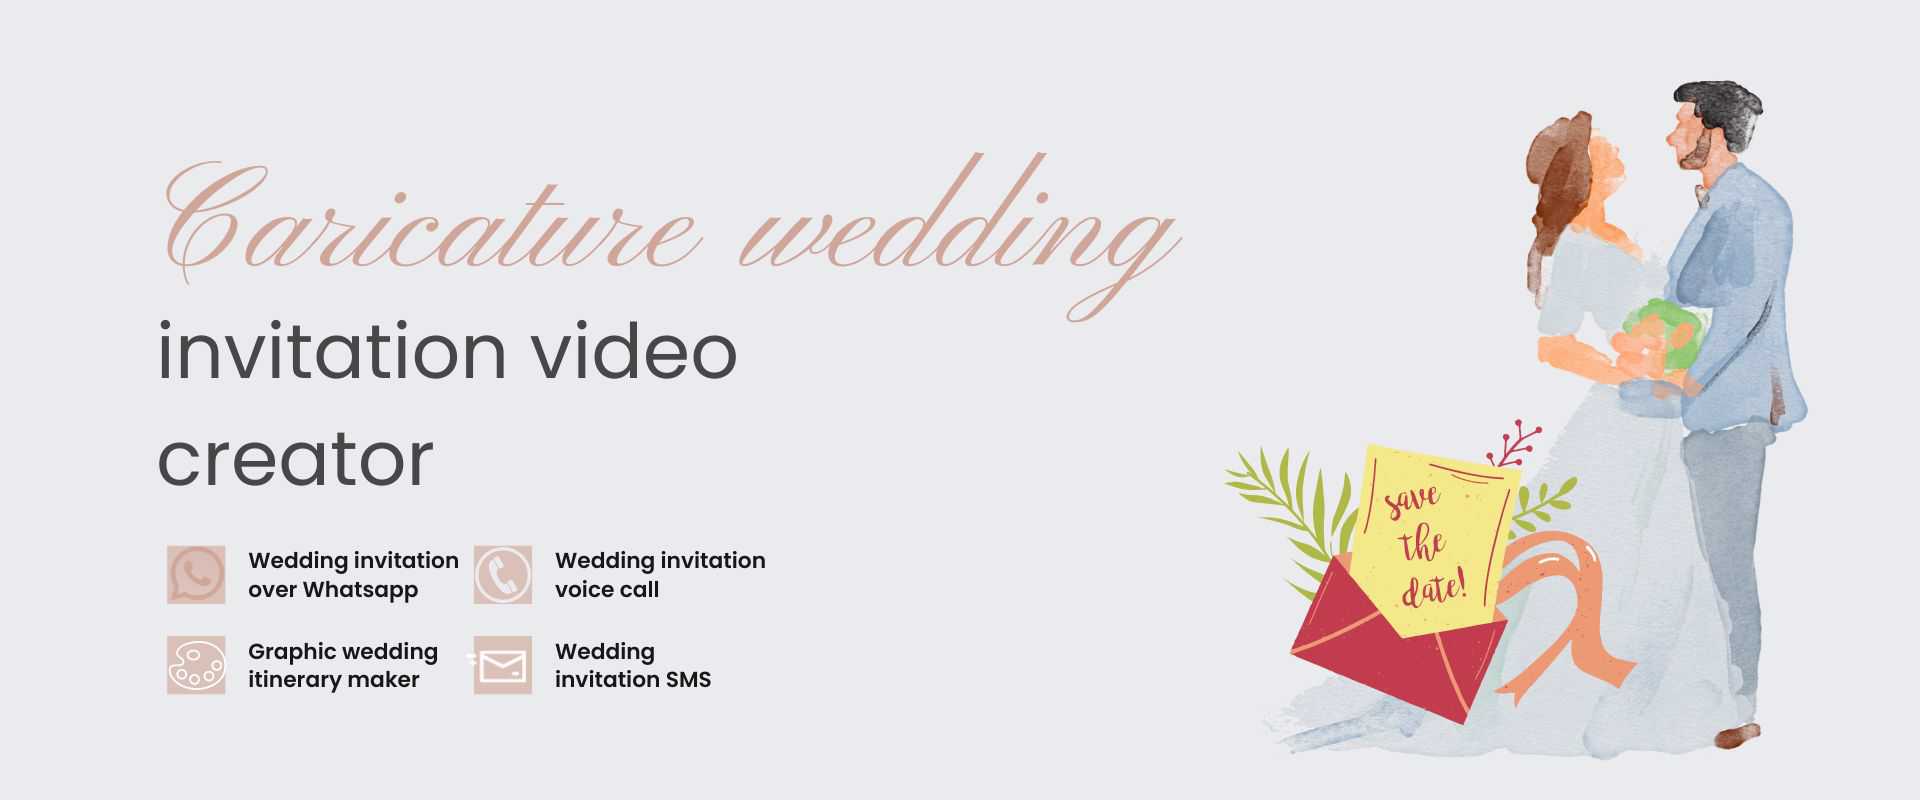 Caricature wedding invitation video maker